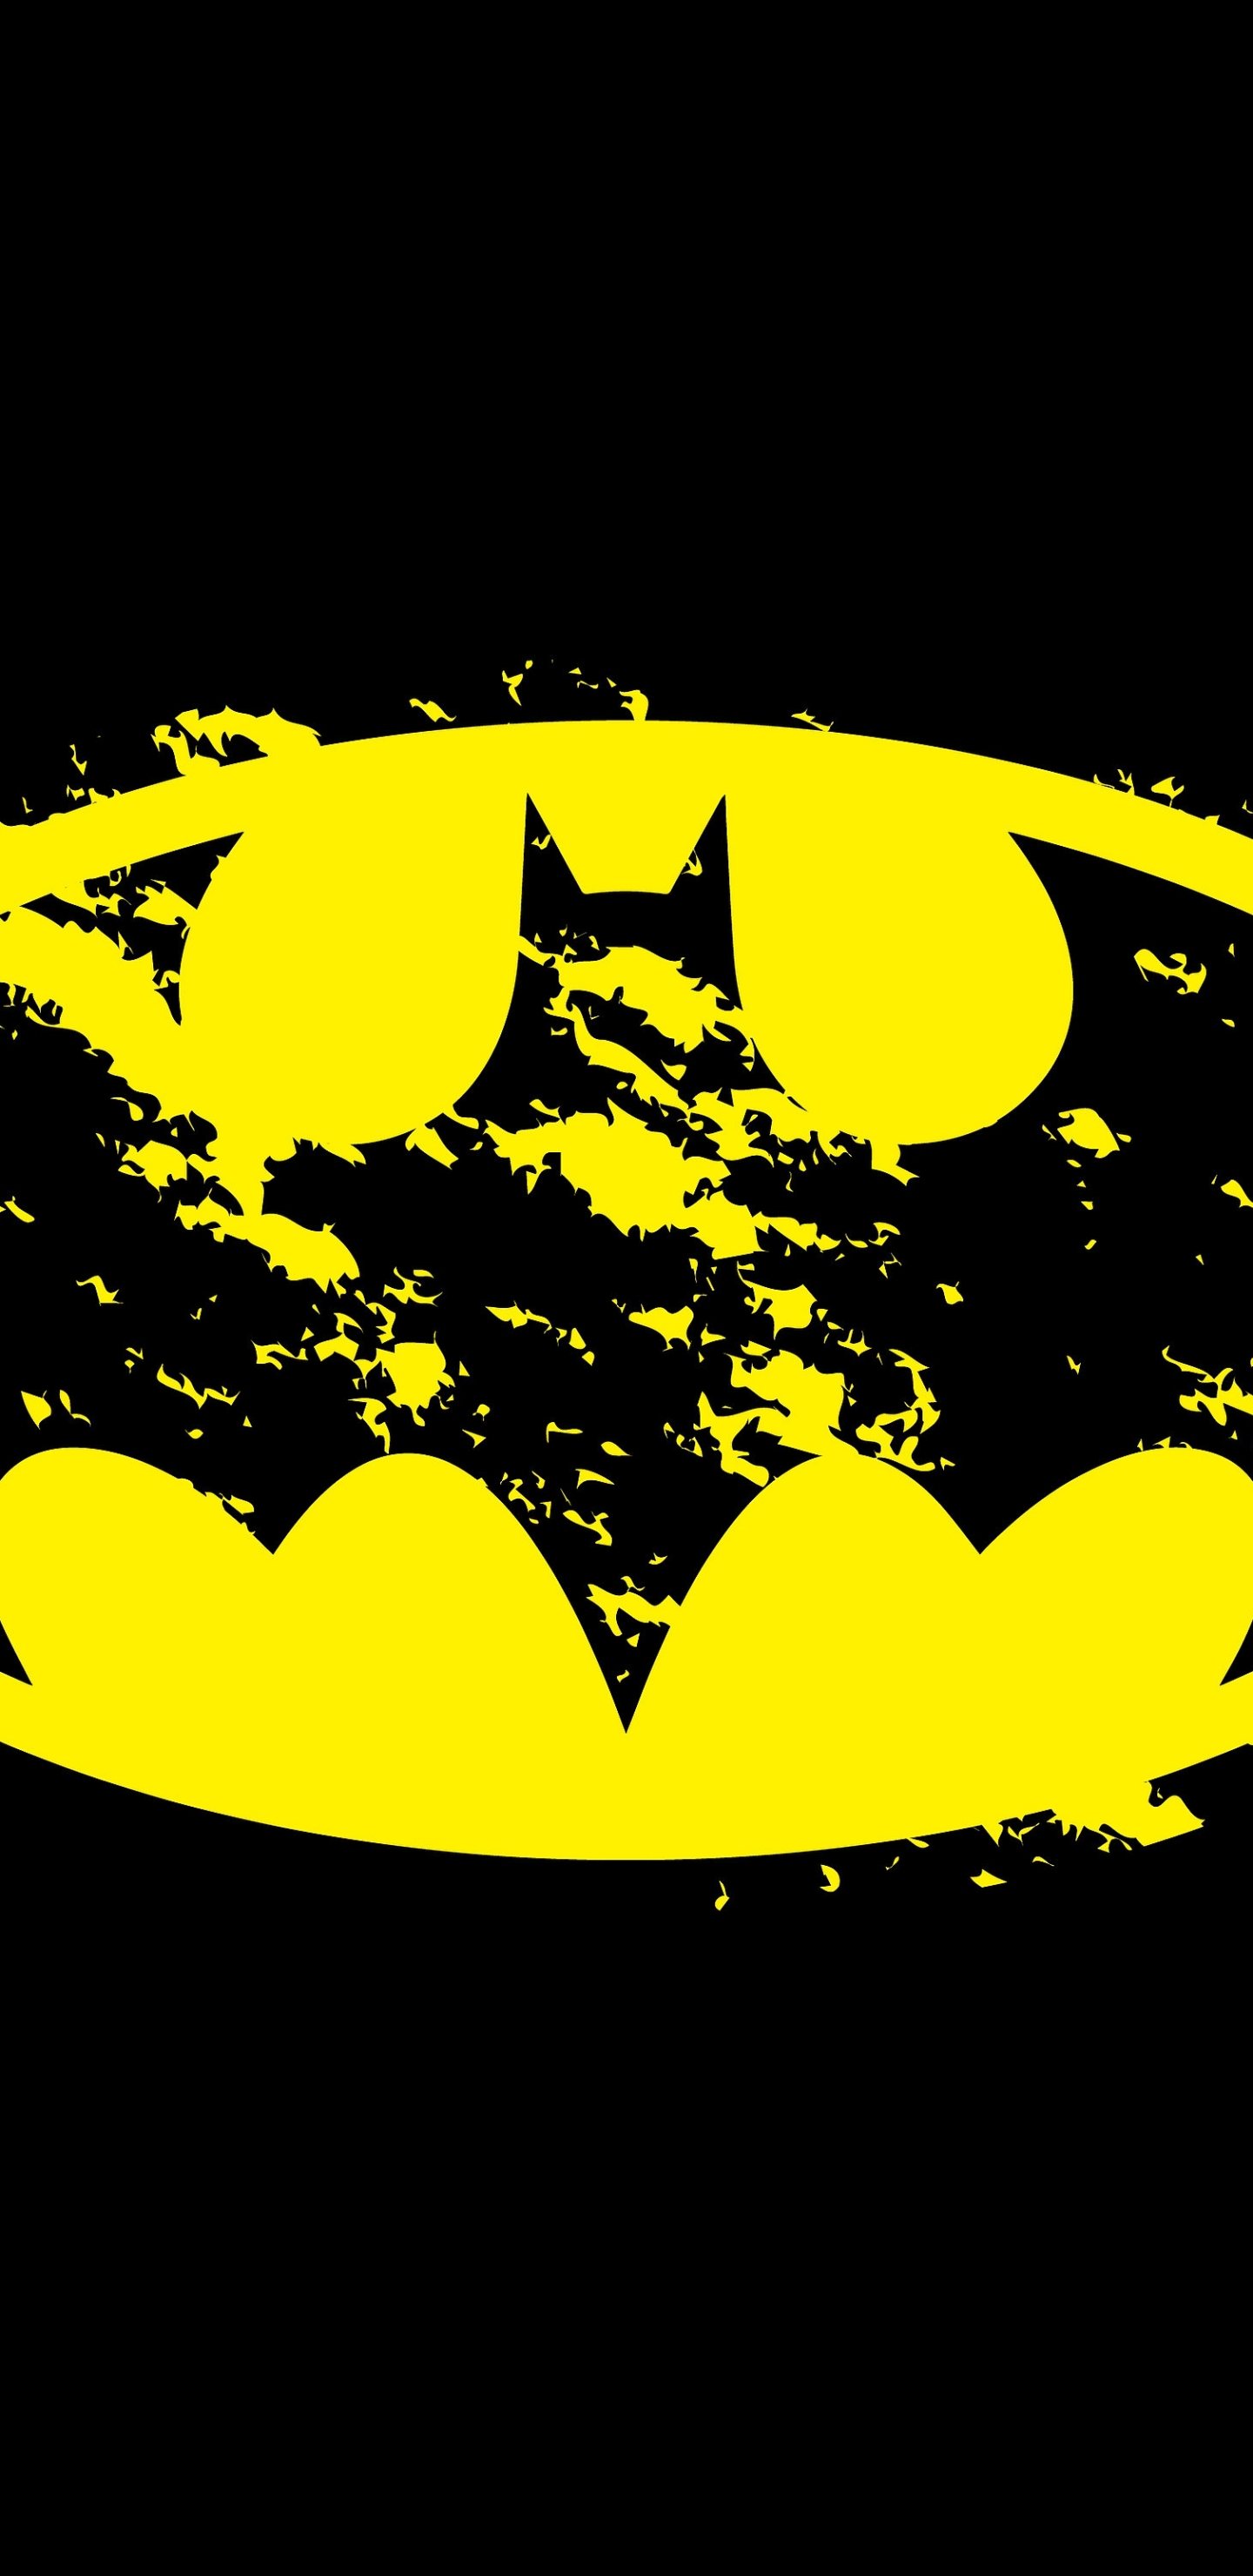 Скачать обои бесплатно Комиксы, Бэтмен, Символ Бэтмена картинка на рабочий стол ПК